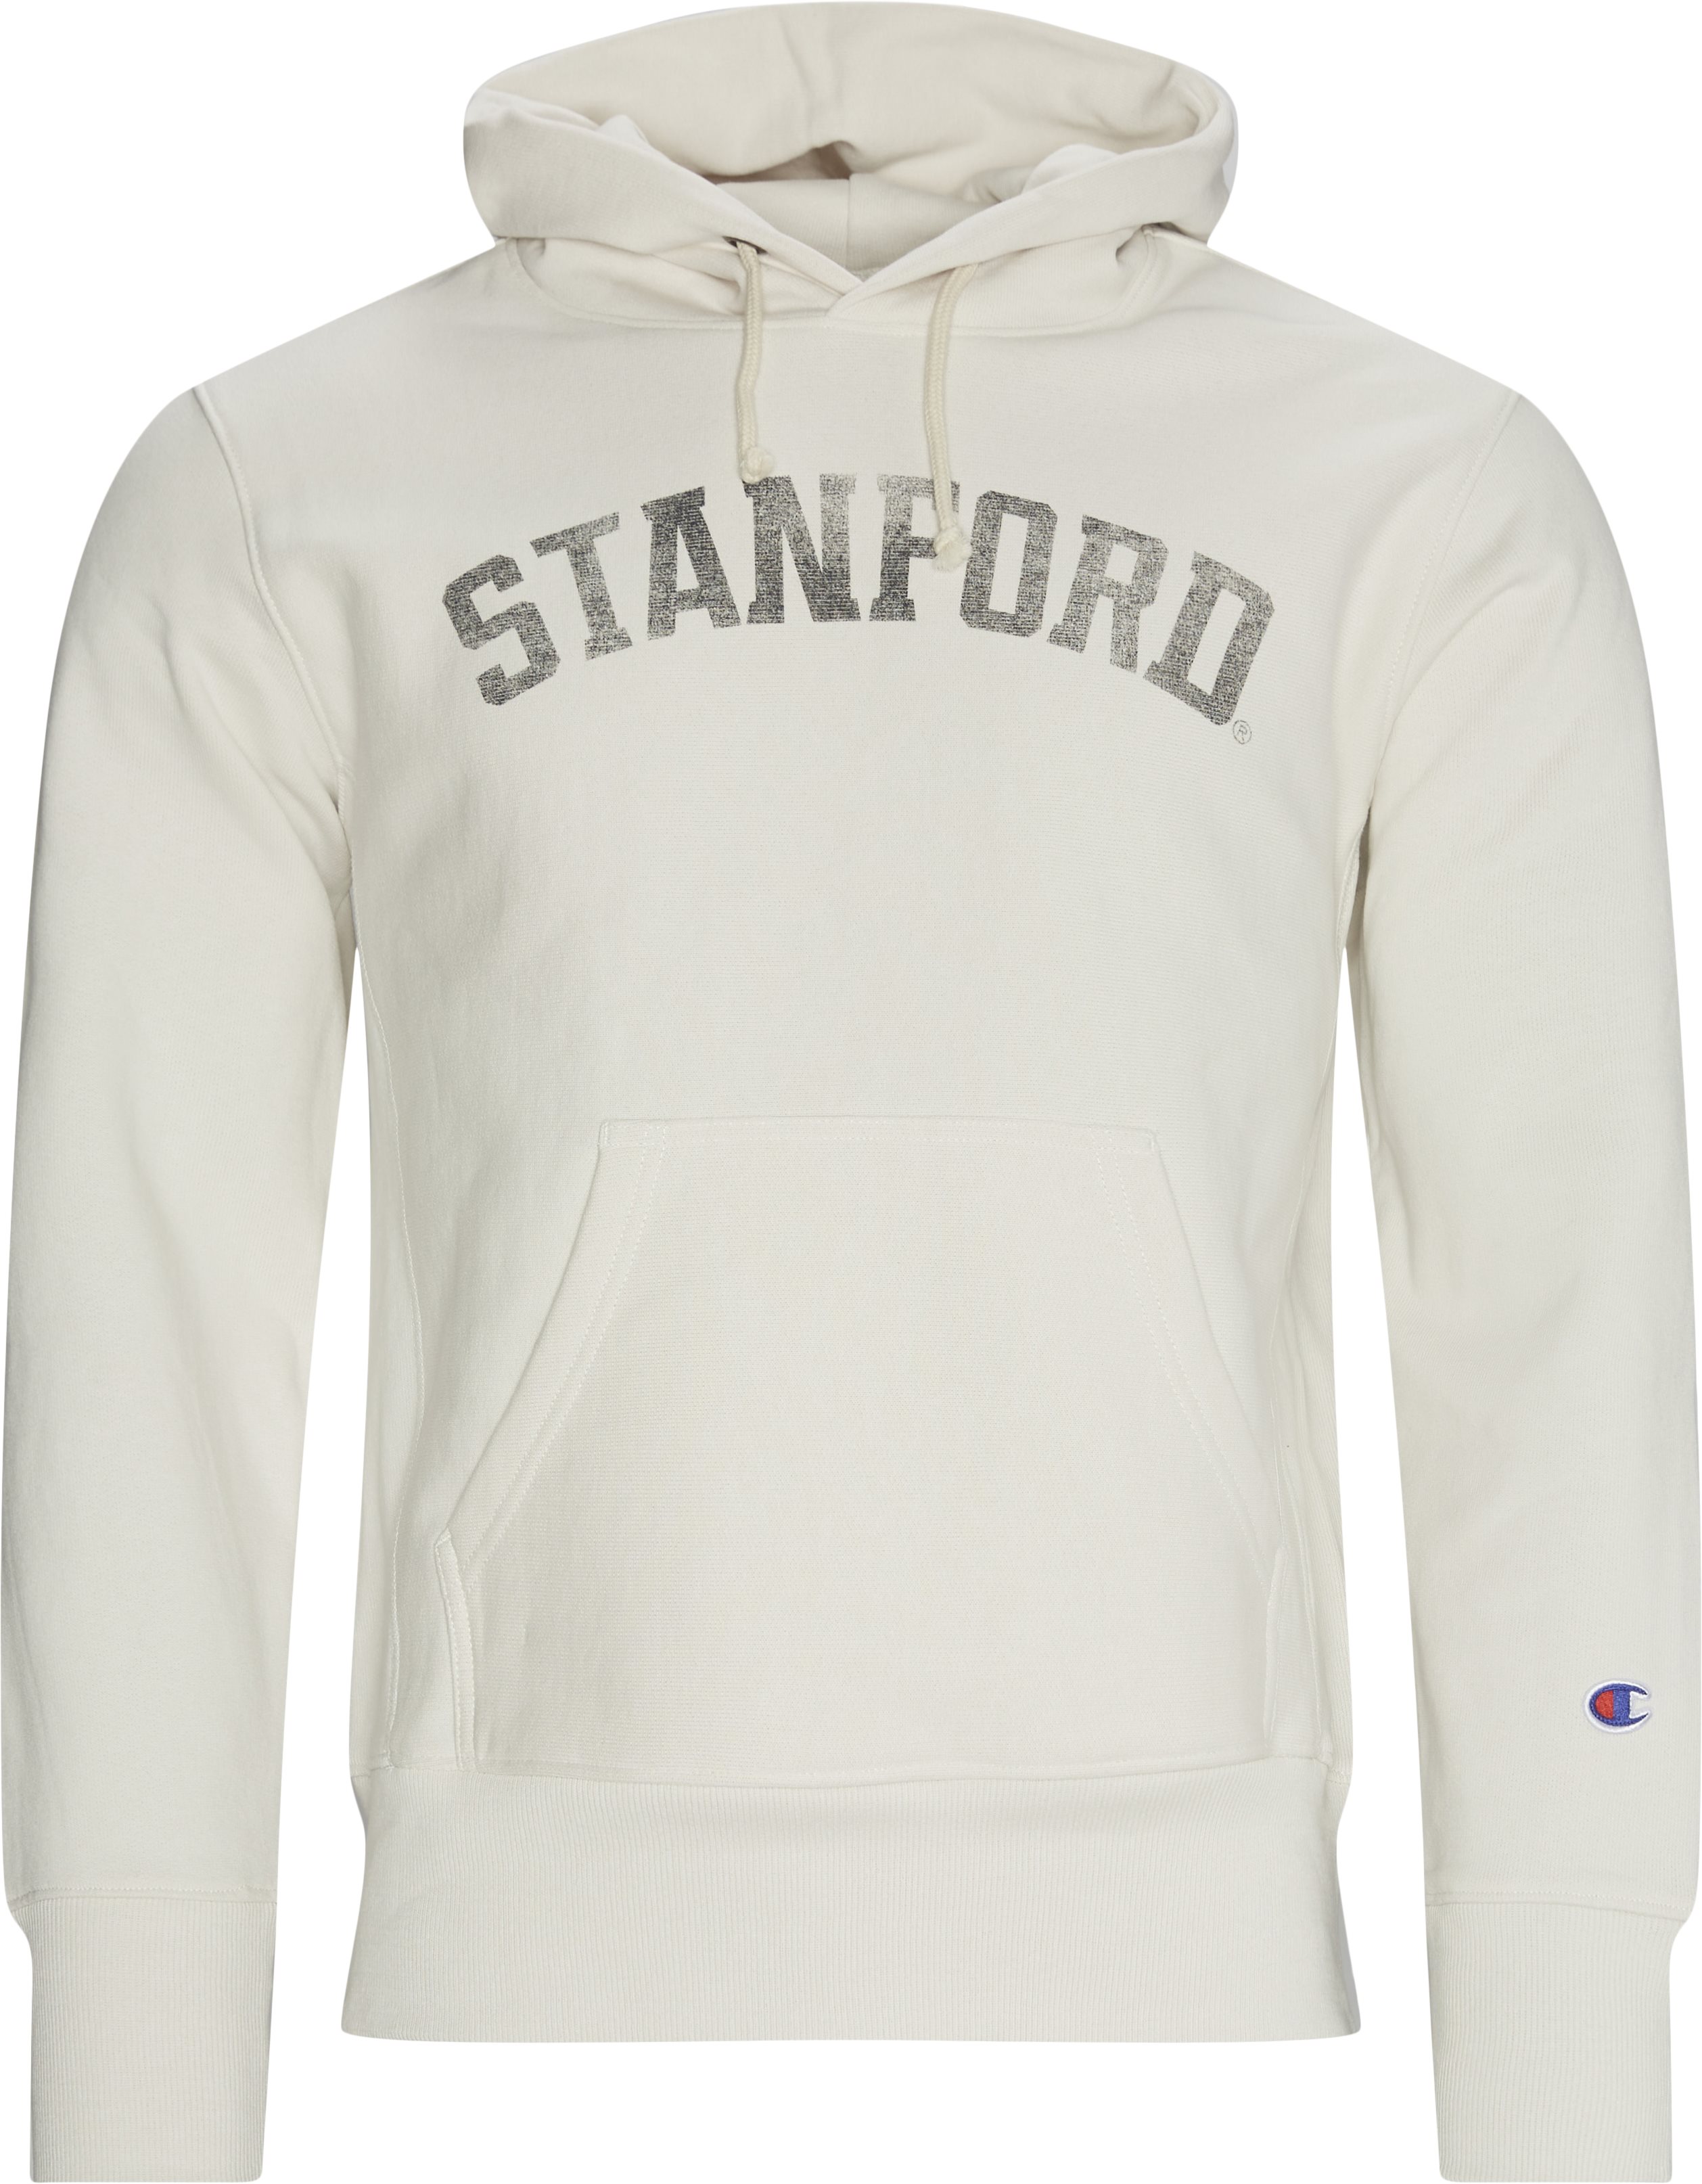 Stanford Hoodie - Sweatshirts - Regular fit - White